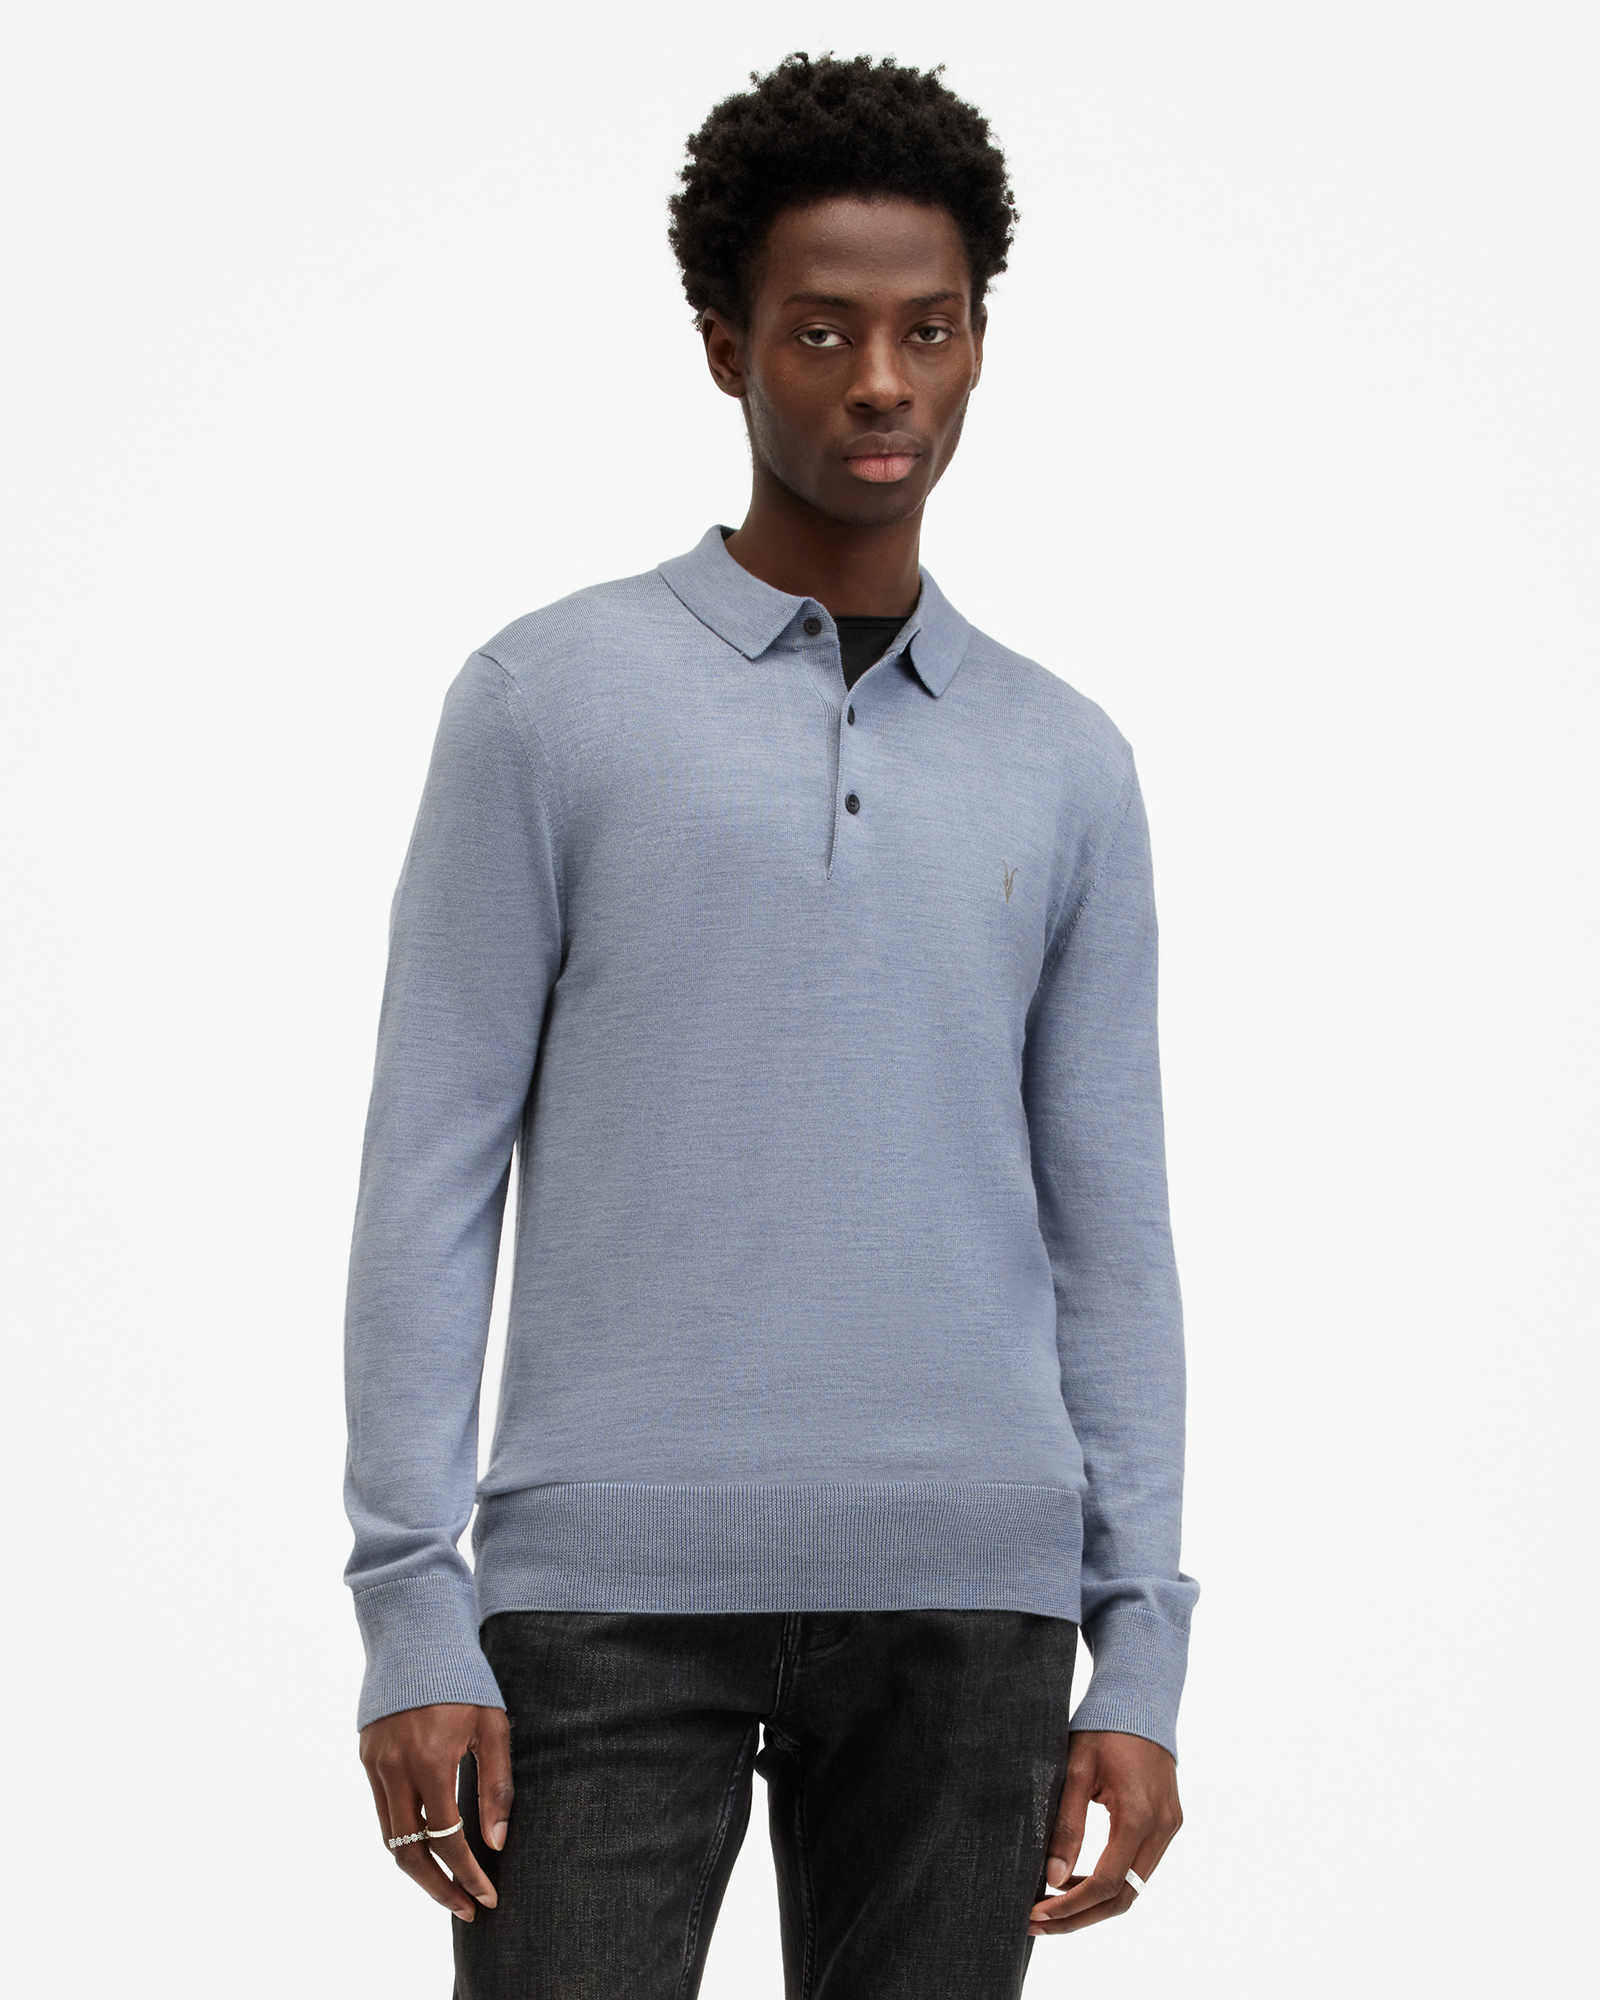 AllSaints Mode Merino Long Sleeve Polo Shirt,, Dusty Blue, Size: